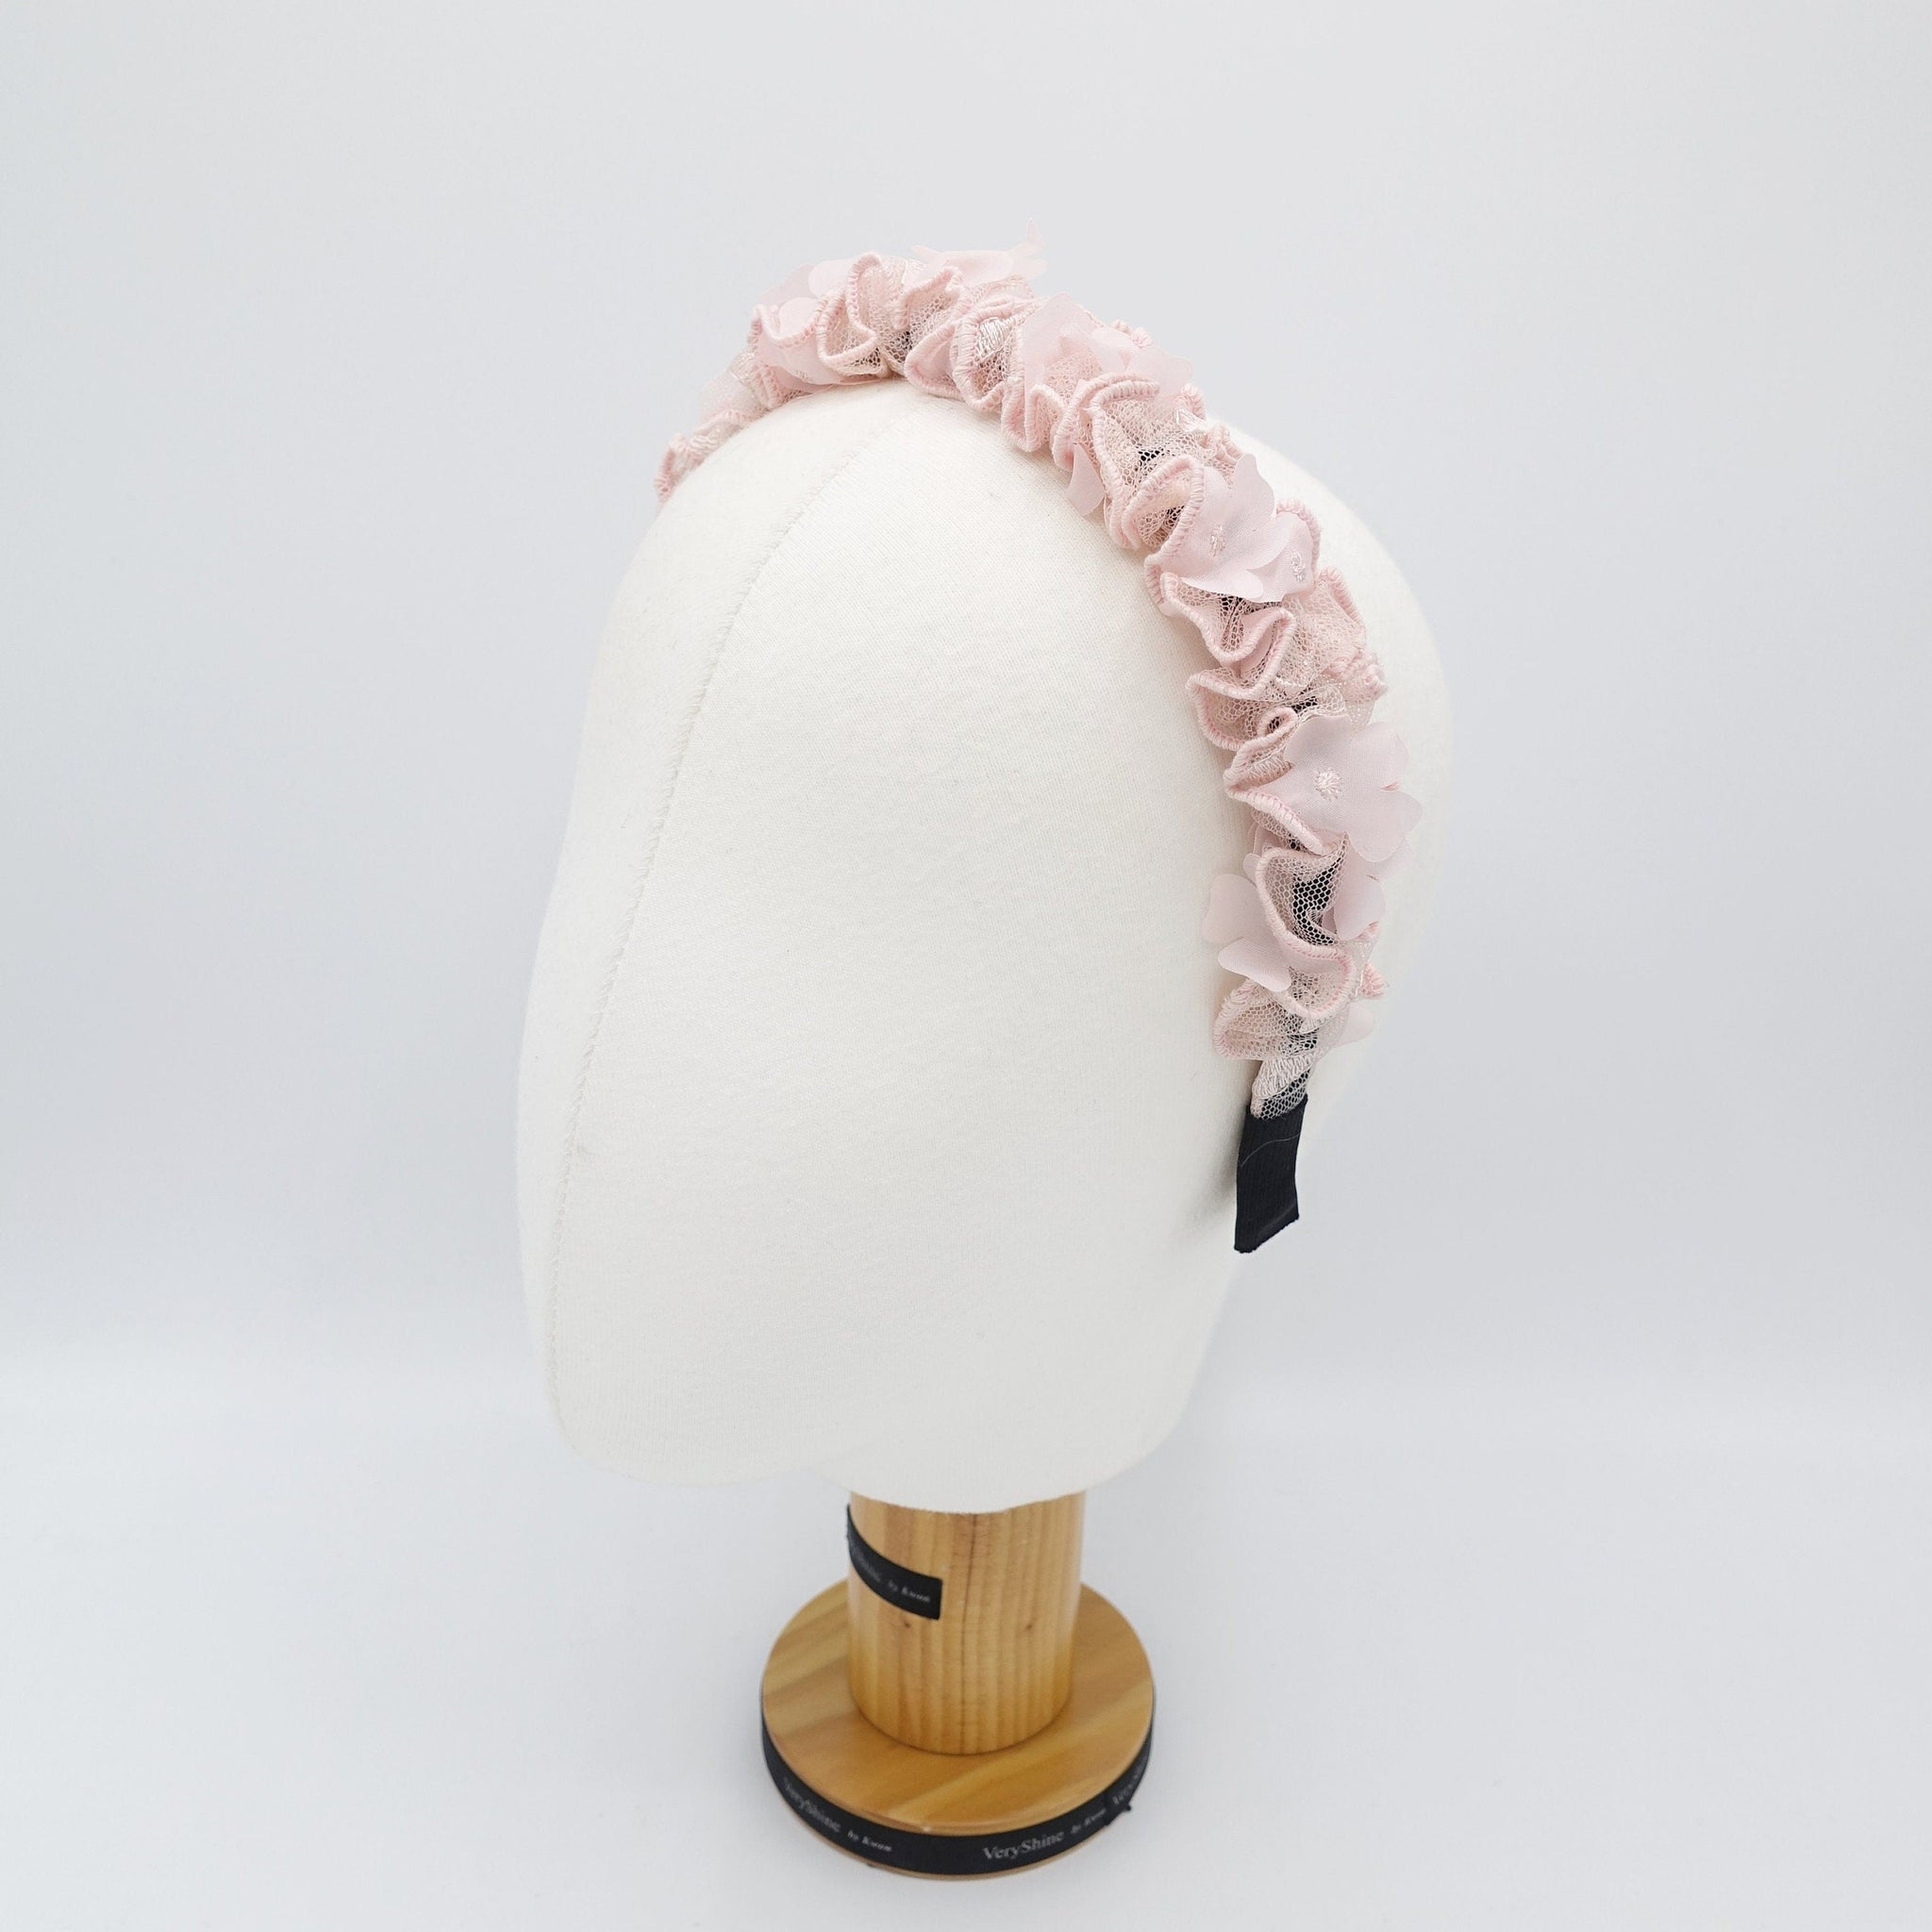 veryshine.com Headband mesh flower ruched headband petal hairband women hair accessory